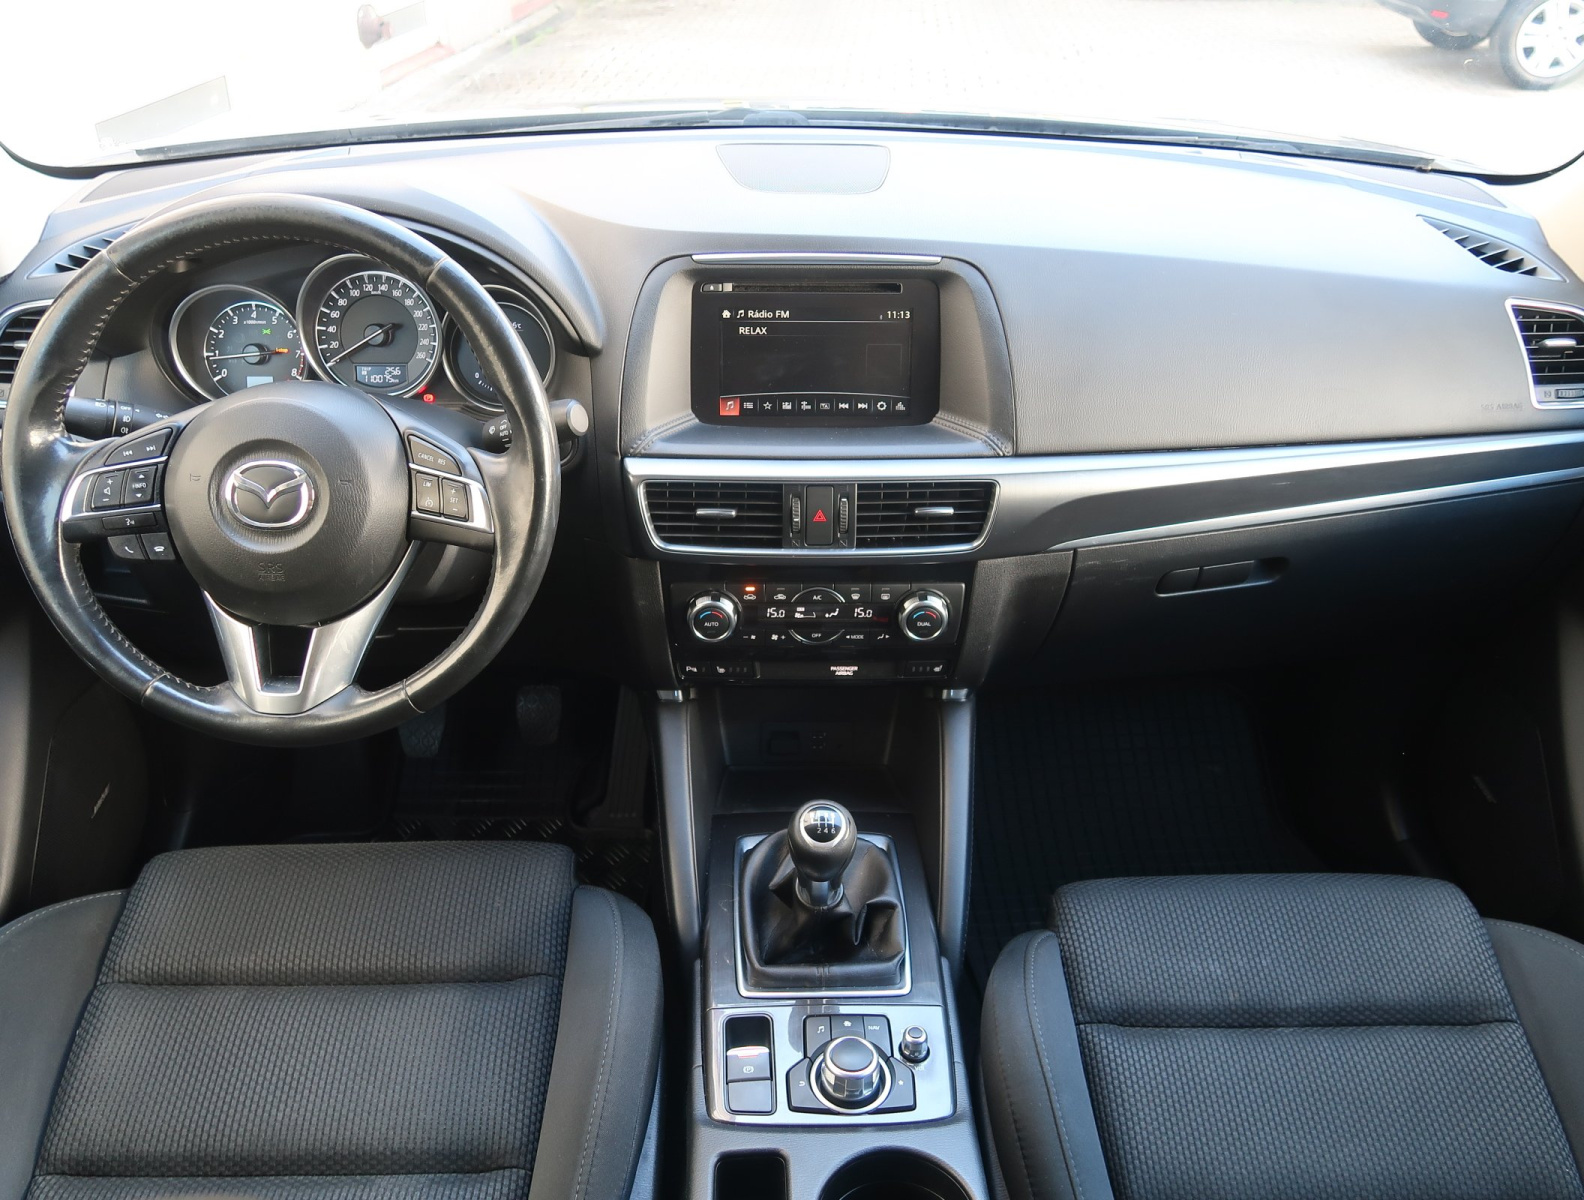 Mazda CX-5, 2016, 2.0 Skyactiv-G, 118kW, 4x4